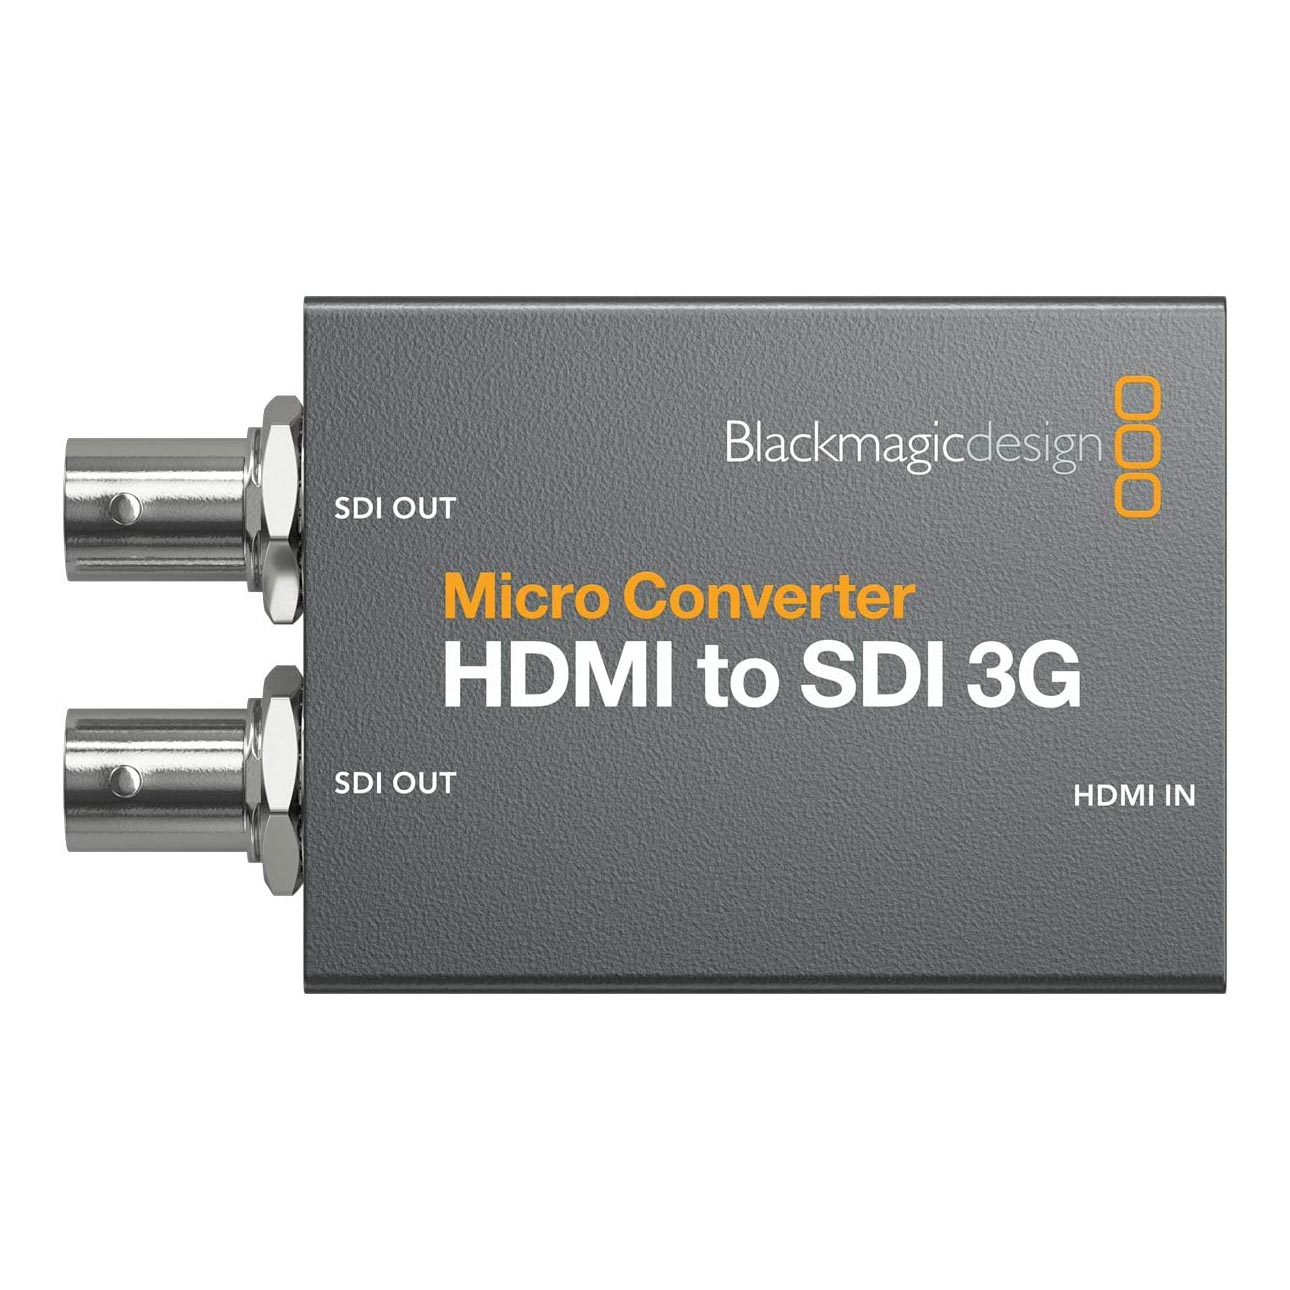 Конвертер Blackmagic Design Micro Converter HDMI to SDI 3G wiistar mini hd 1080p 3g hdmi to sdi converter box support sd hd sdi 3g sdi signals showing hdmi hdmi2sdi sdi to hdmi